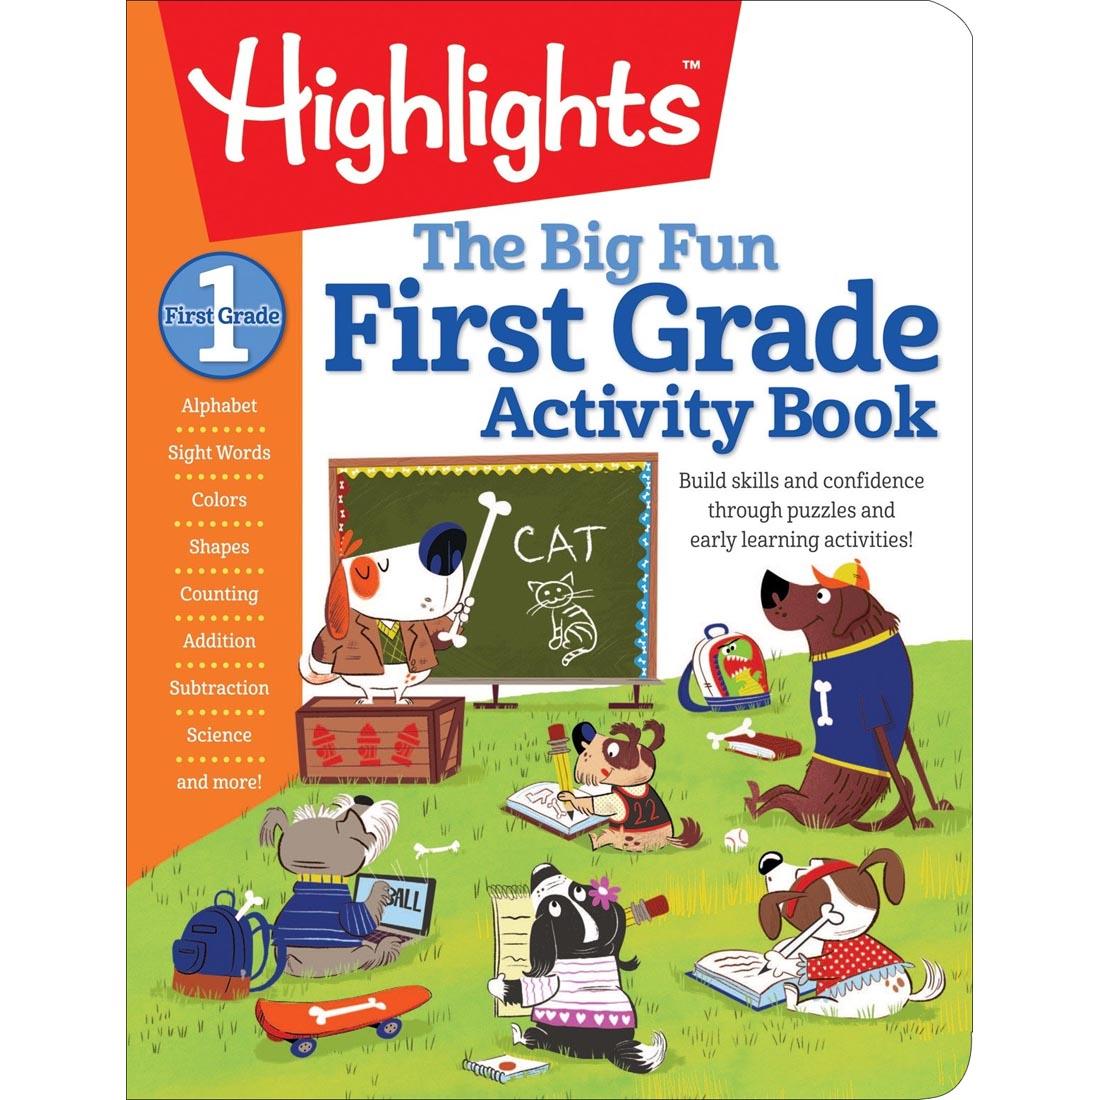 Highlights The Big Fun First Grade Activity Book